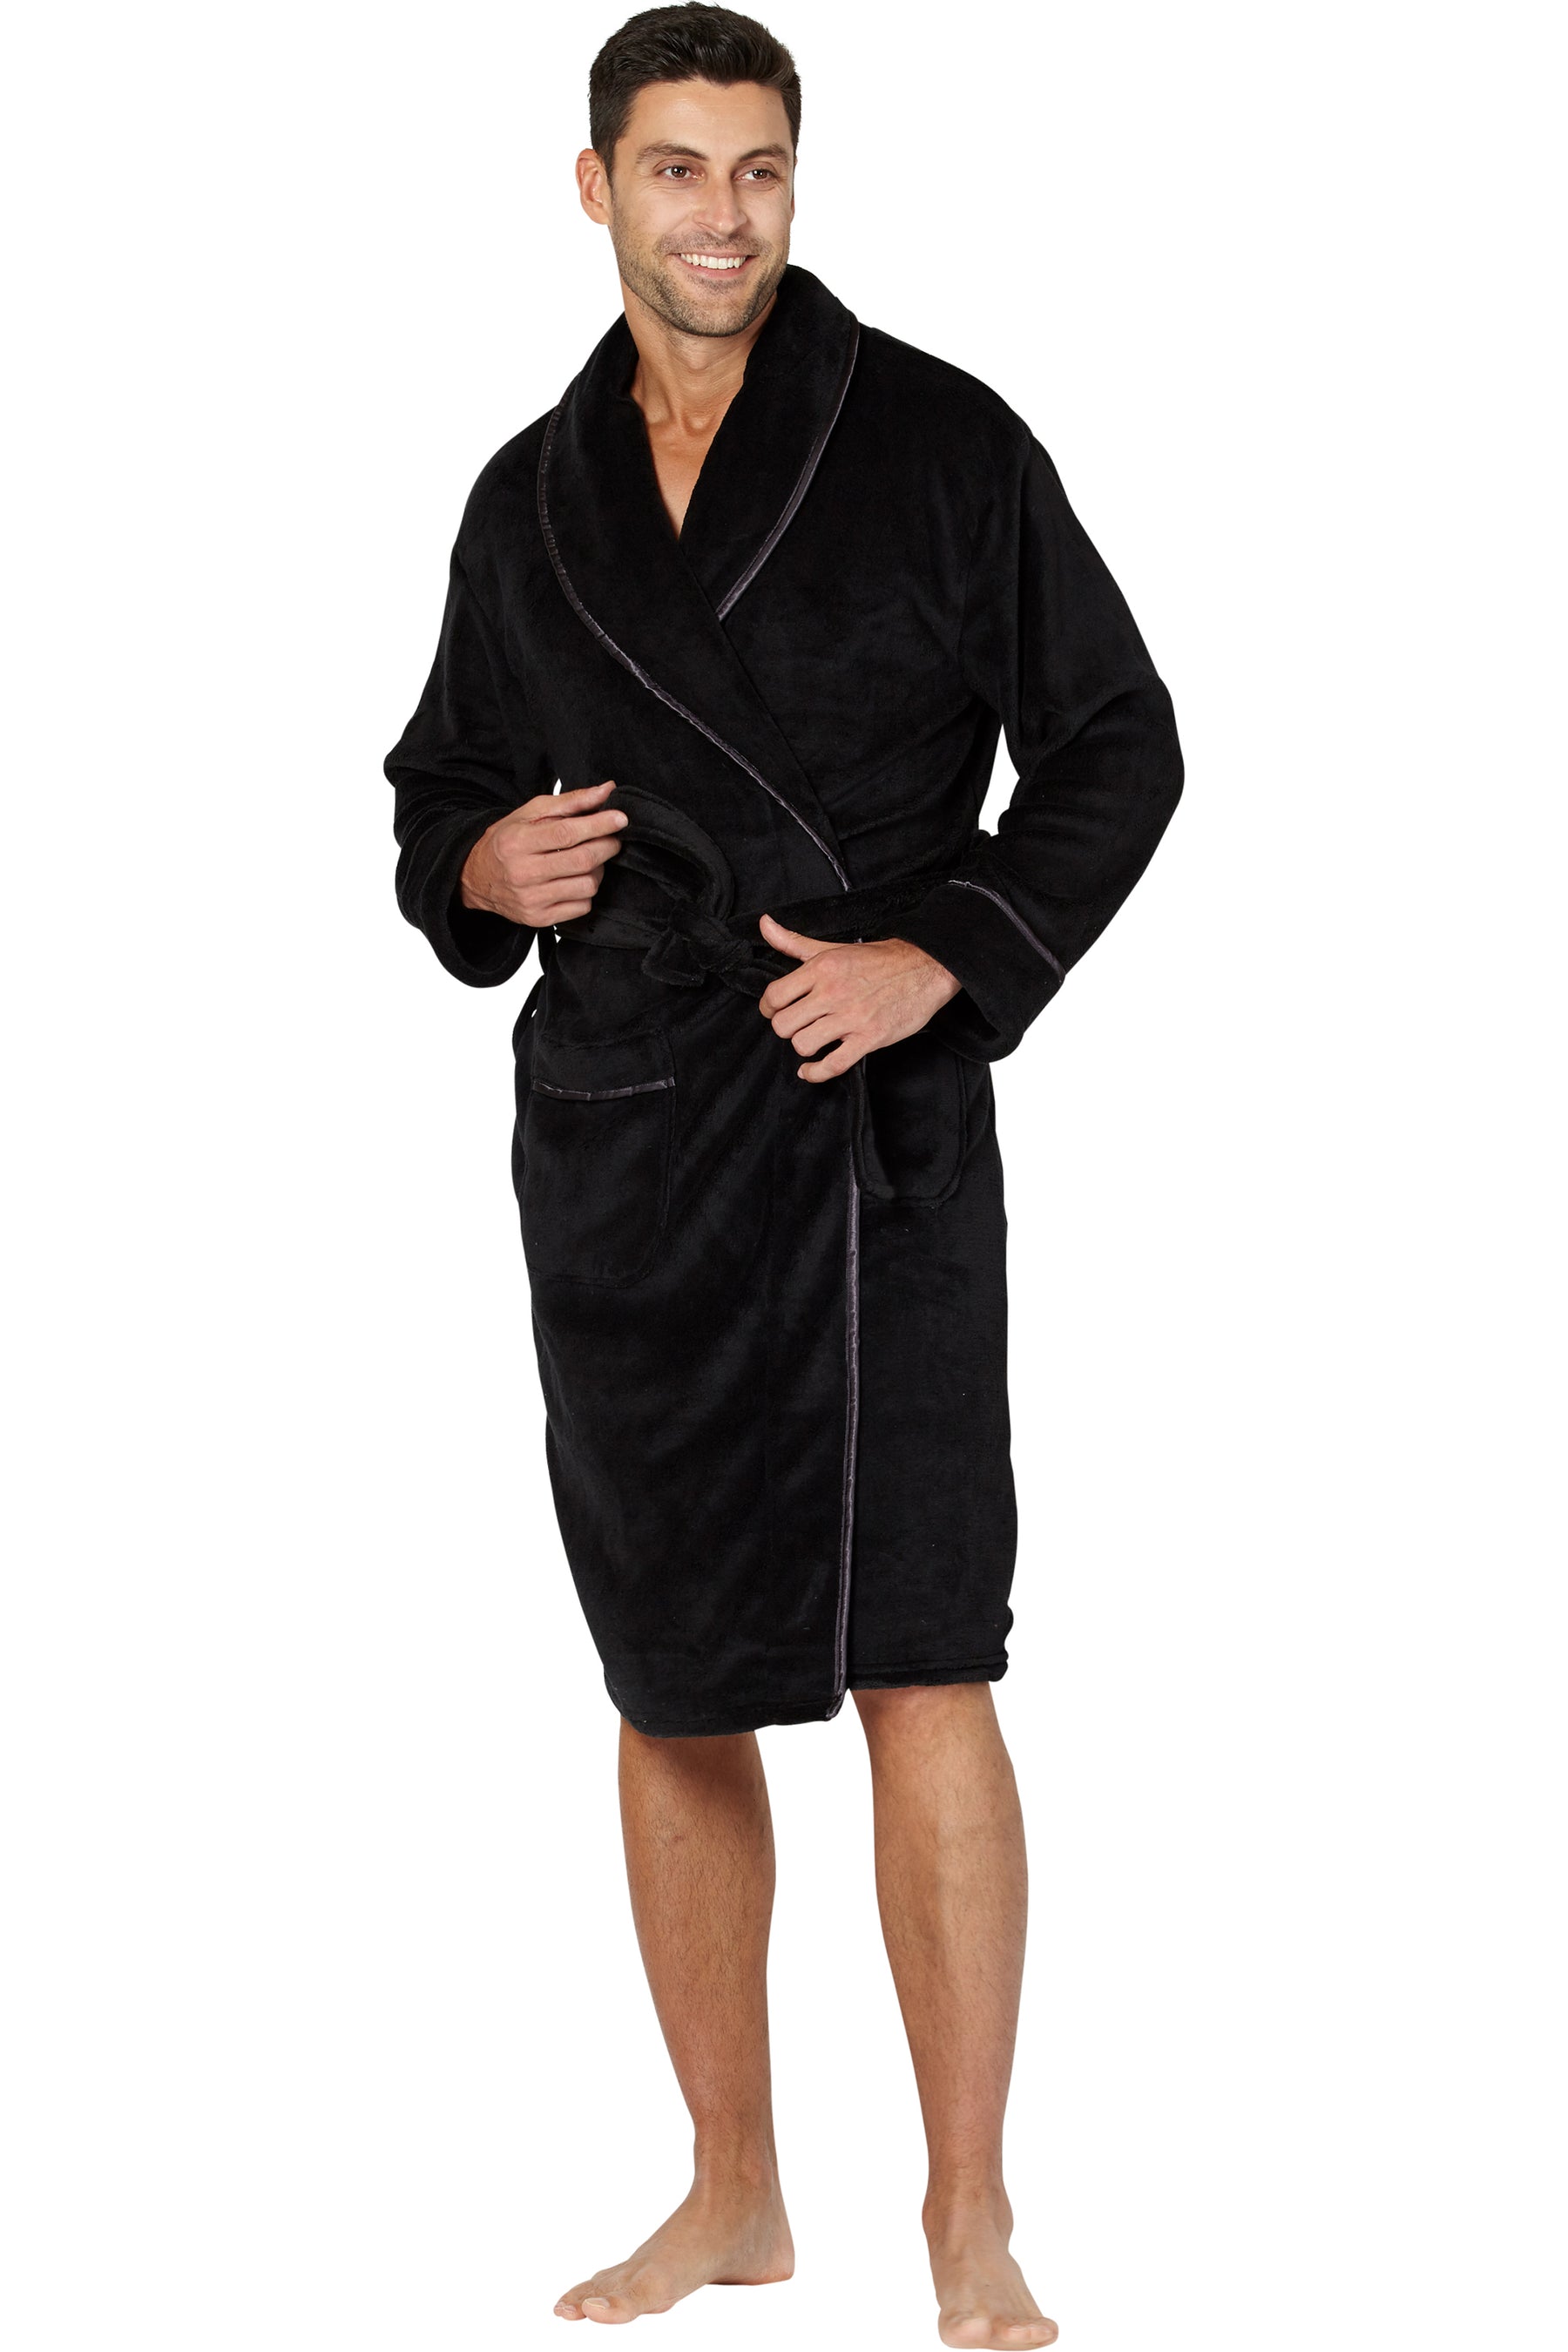 Buy Men's Robes Hooded Nightwear Online | Next UK